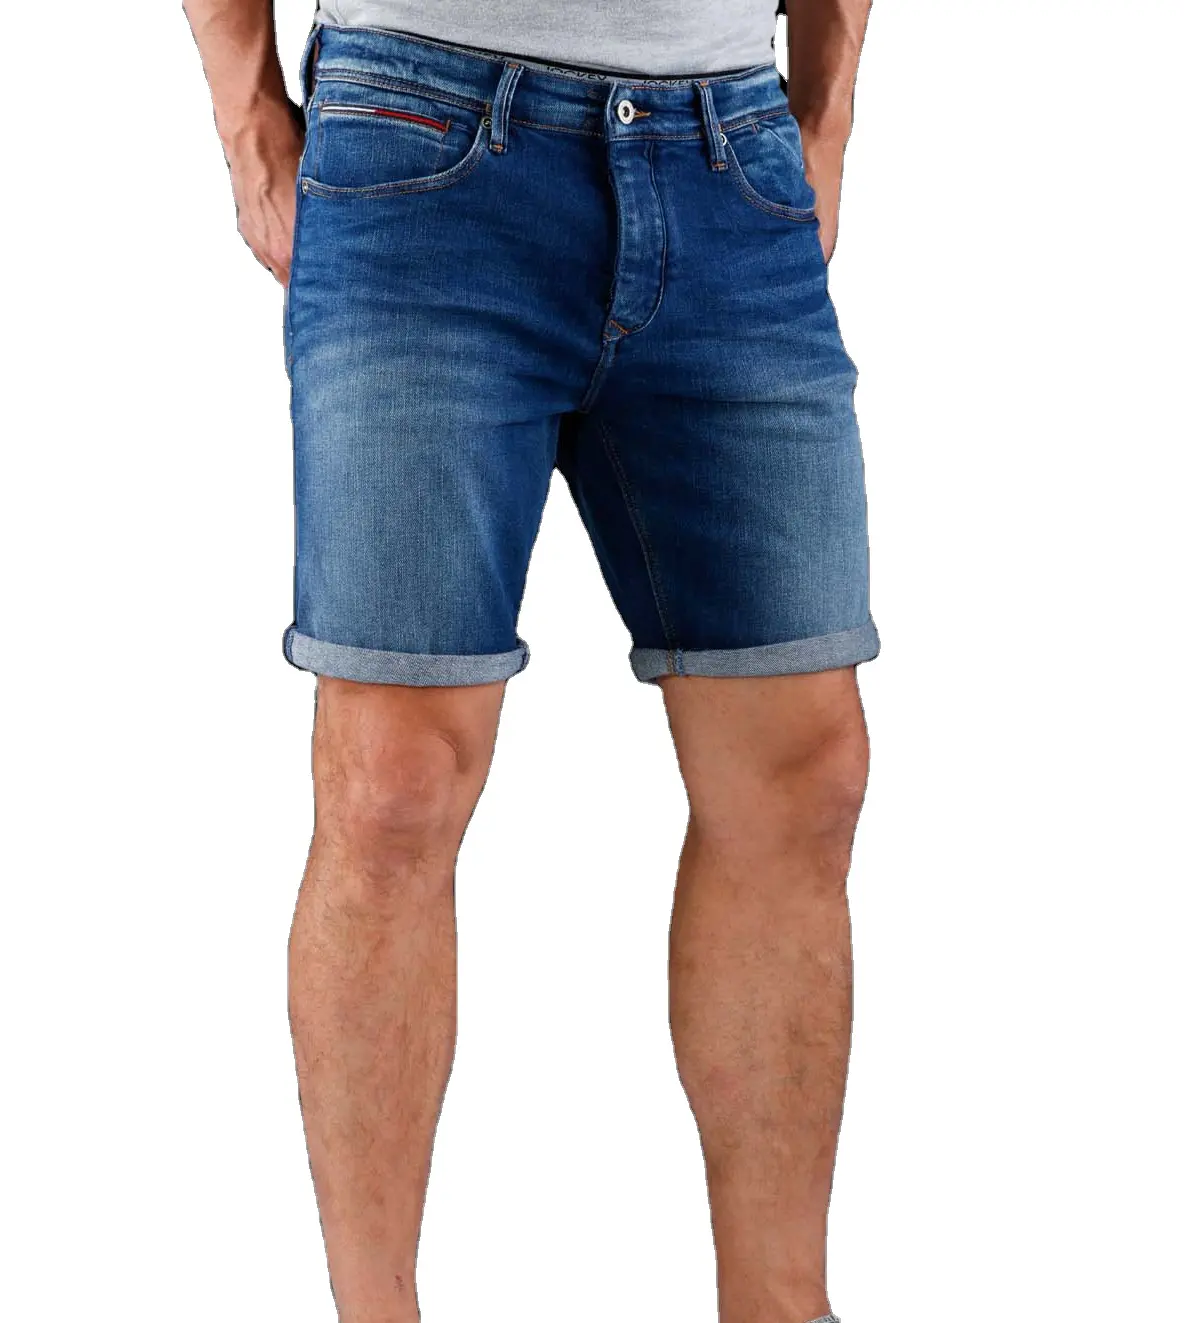 Aangepaste Man Trendy Hoge Kwaliteit Modieuze Gewassen Blauwe Lengte 2023 Zomer Denim Shorts Heren Polar Big Boy Slim Fit Shorts